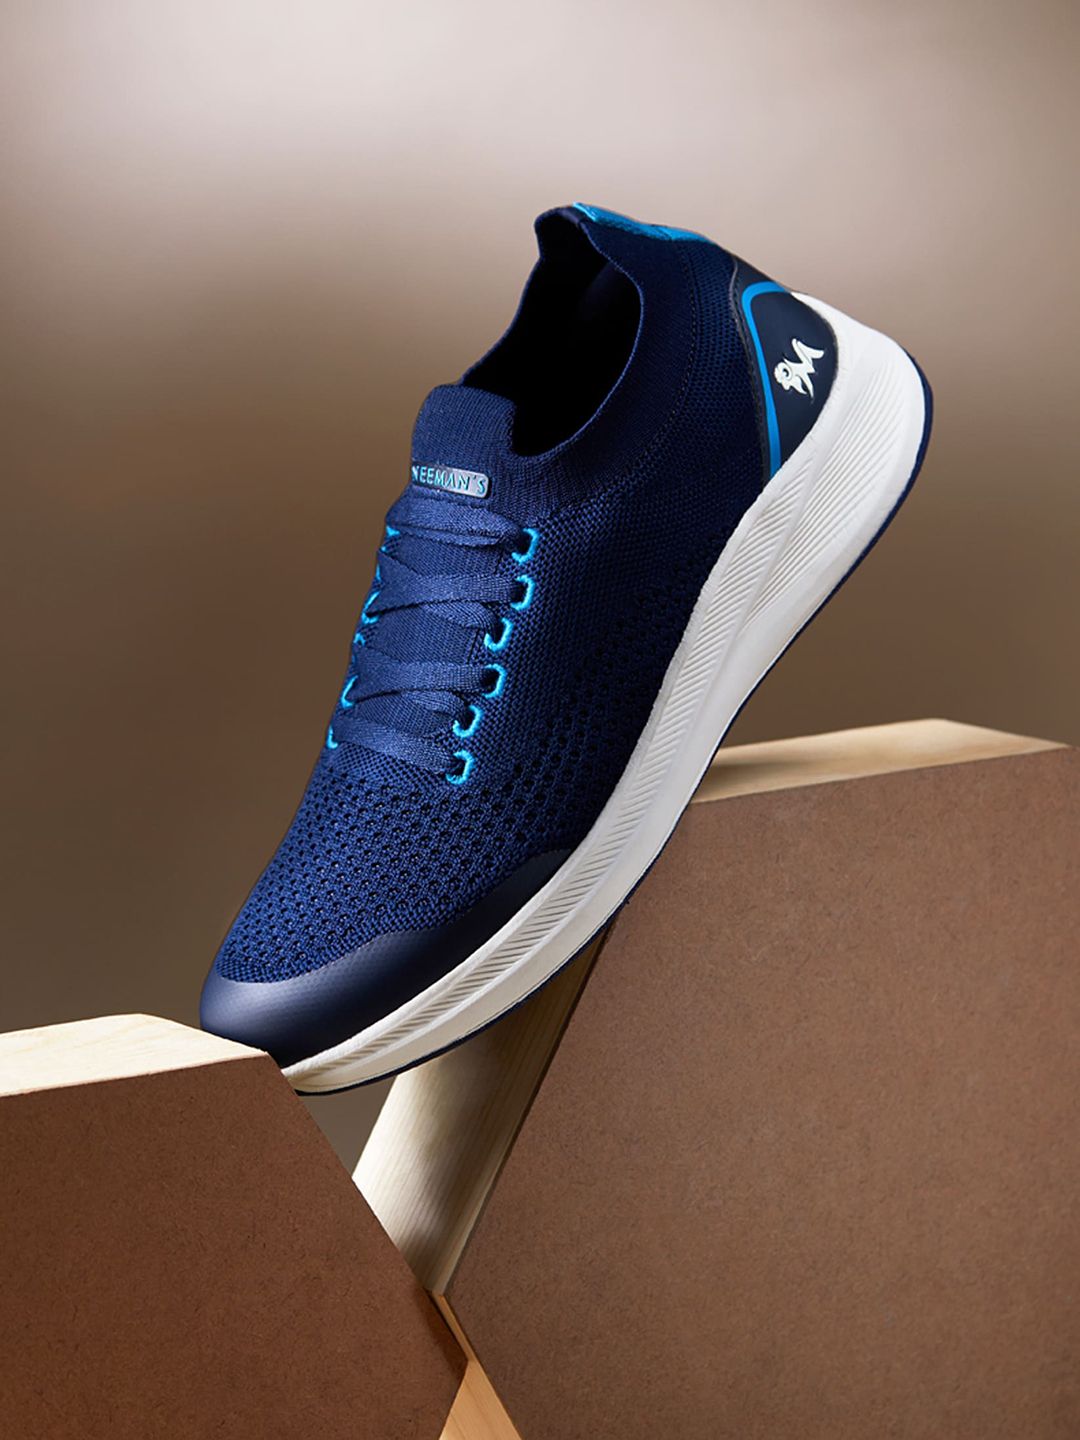 NEEMANS Unisex Navy Blue Colourblocked Sneakers Price in India